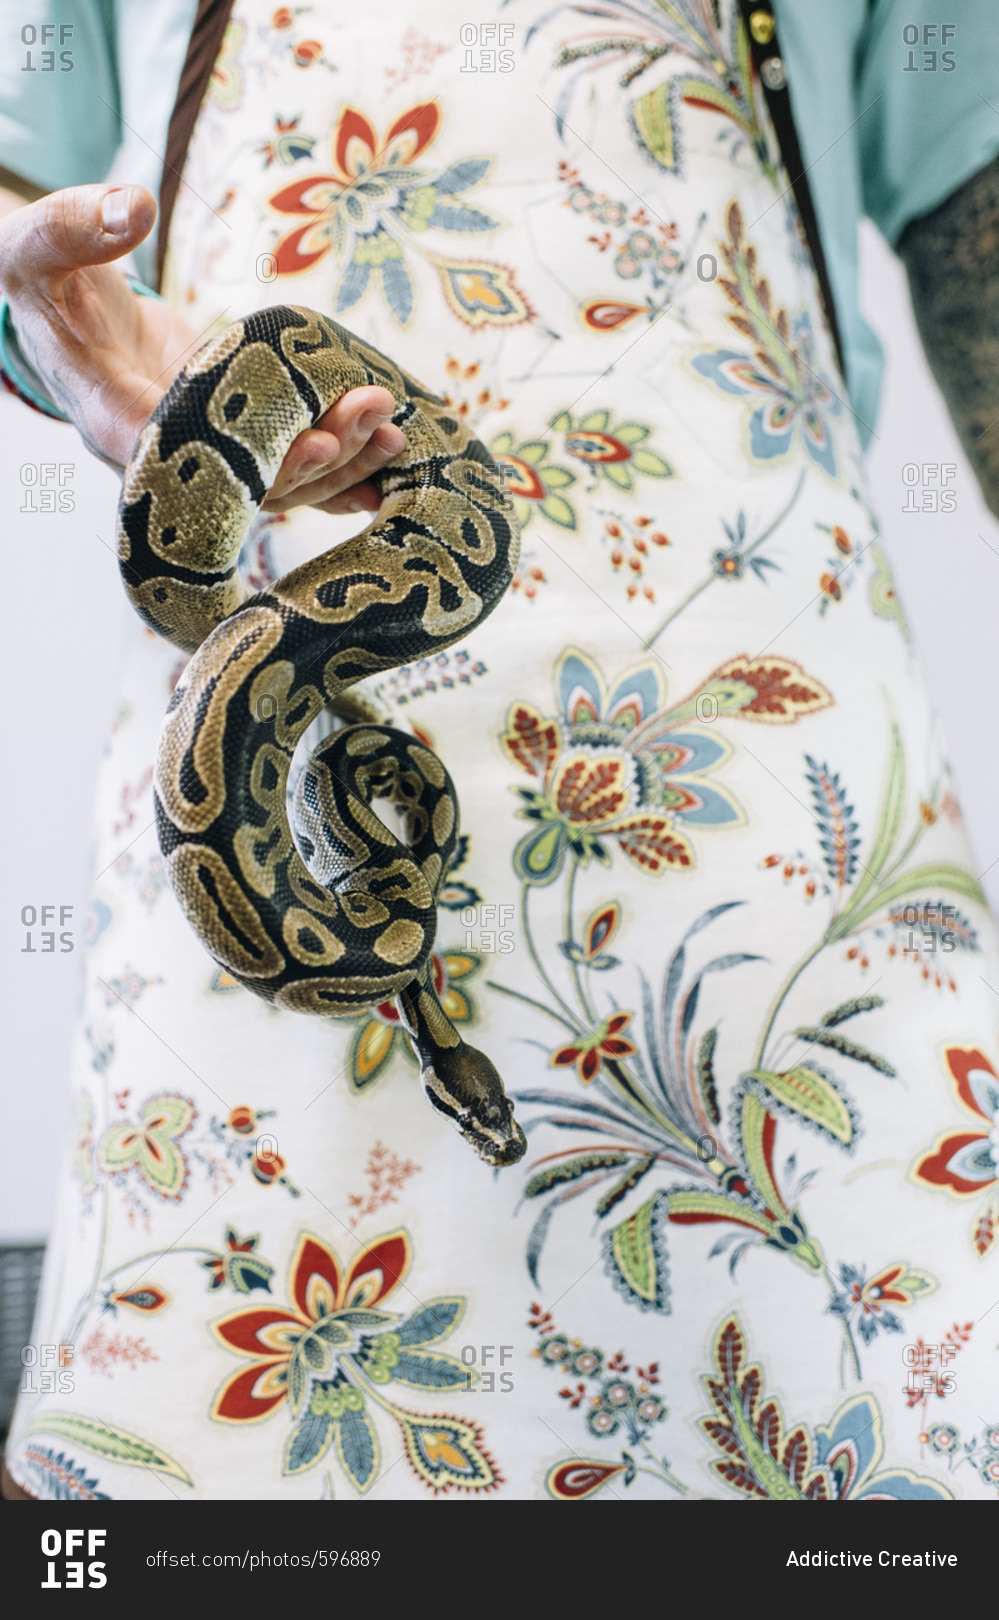 Tattoo master dressed in funny apron holding big snake. Vertical indoors shot.